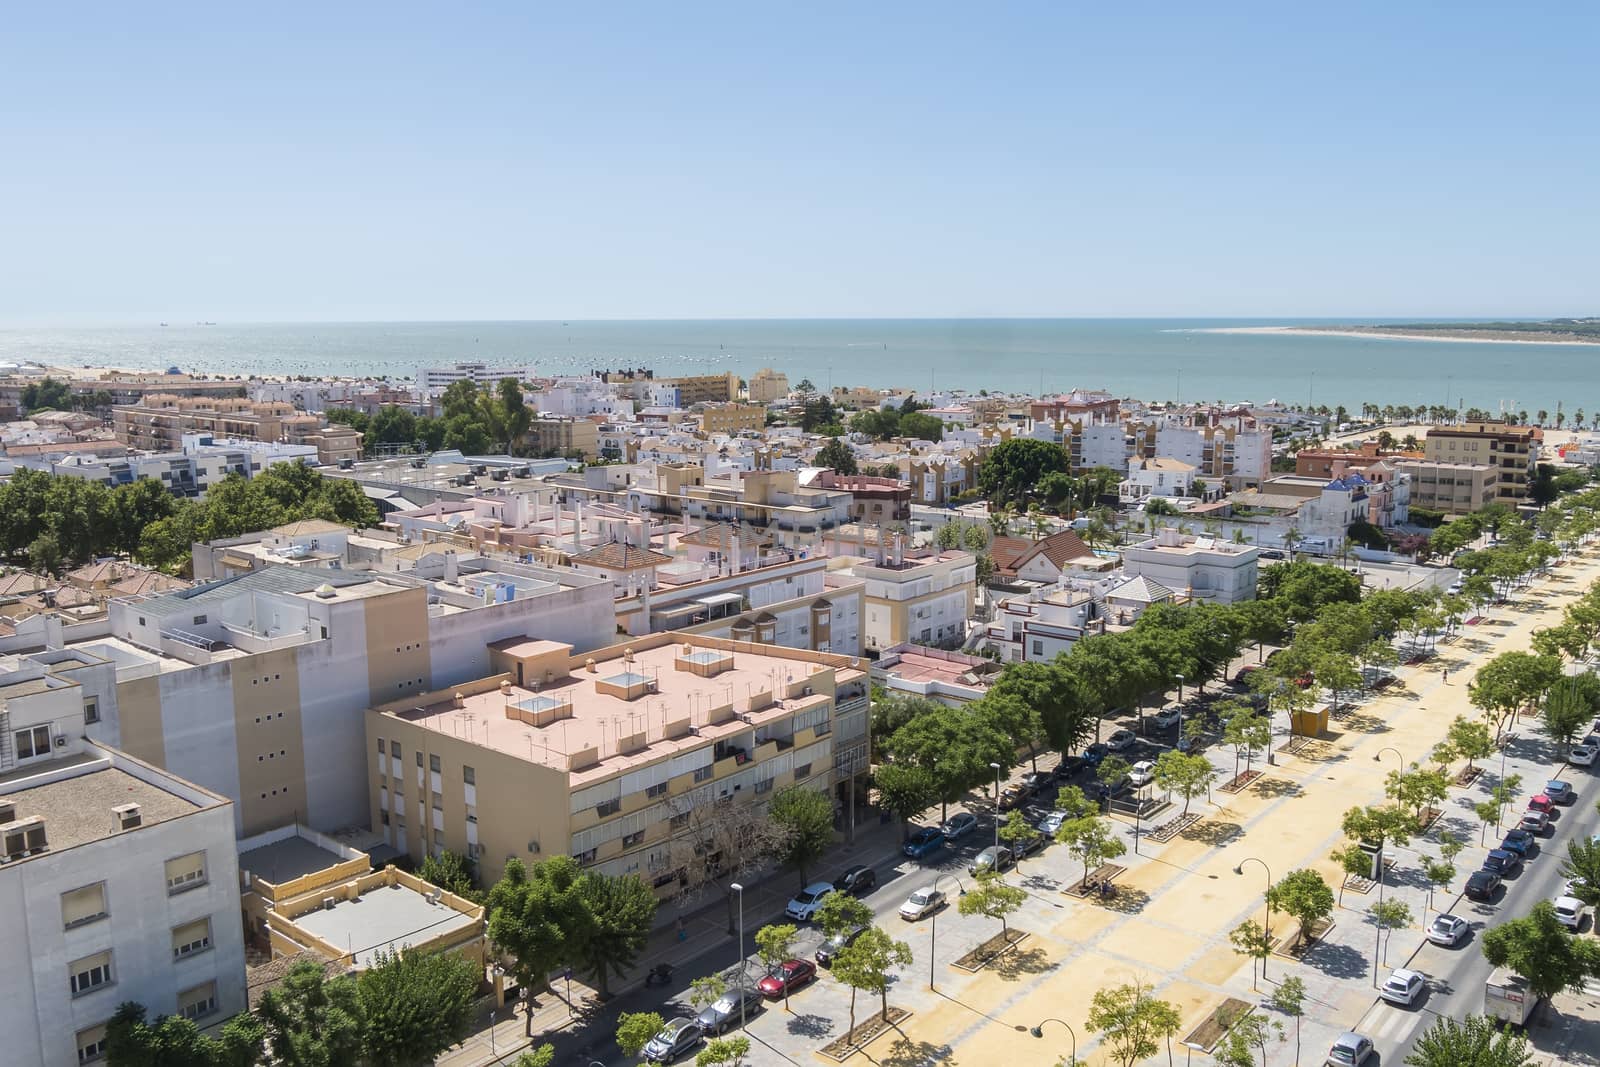 Sanlucar de Barrameda aereal view, Cadiz, Spain by max8xam